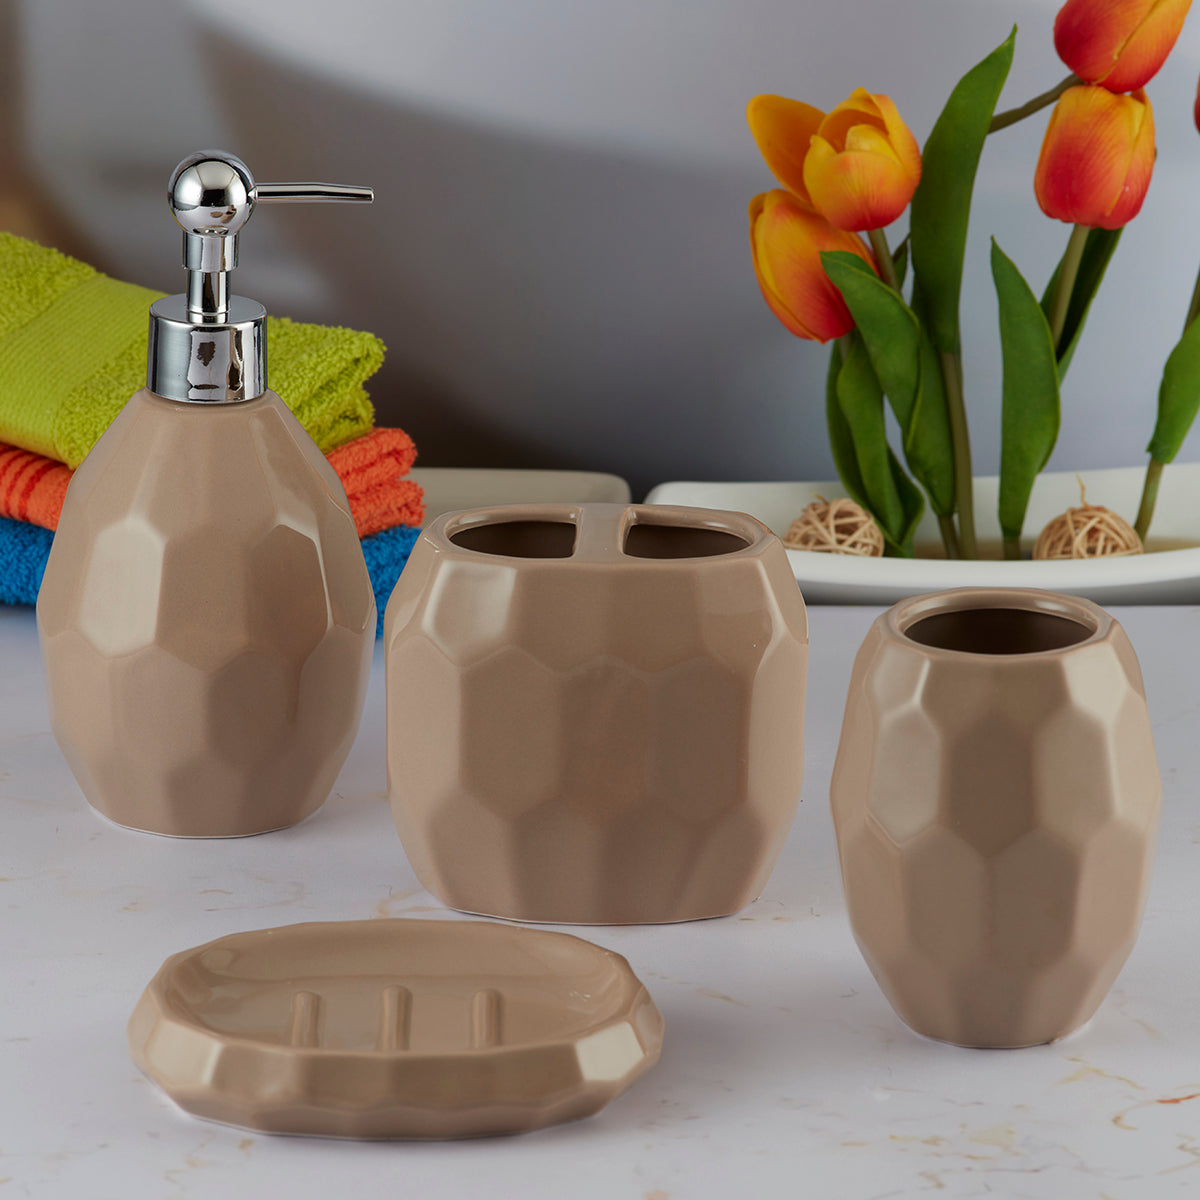 Ceramic Bathroom Accessories Set of 4 Bath Set with Soap Dispenser (8105)